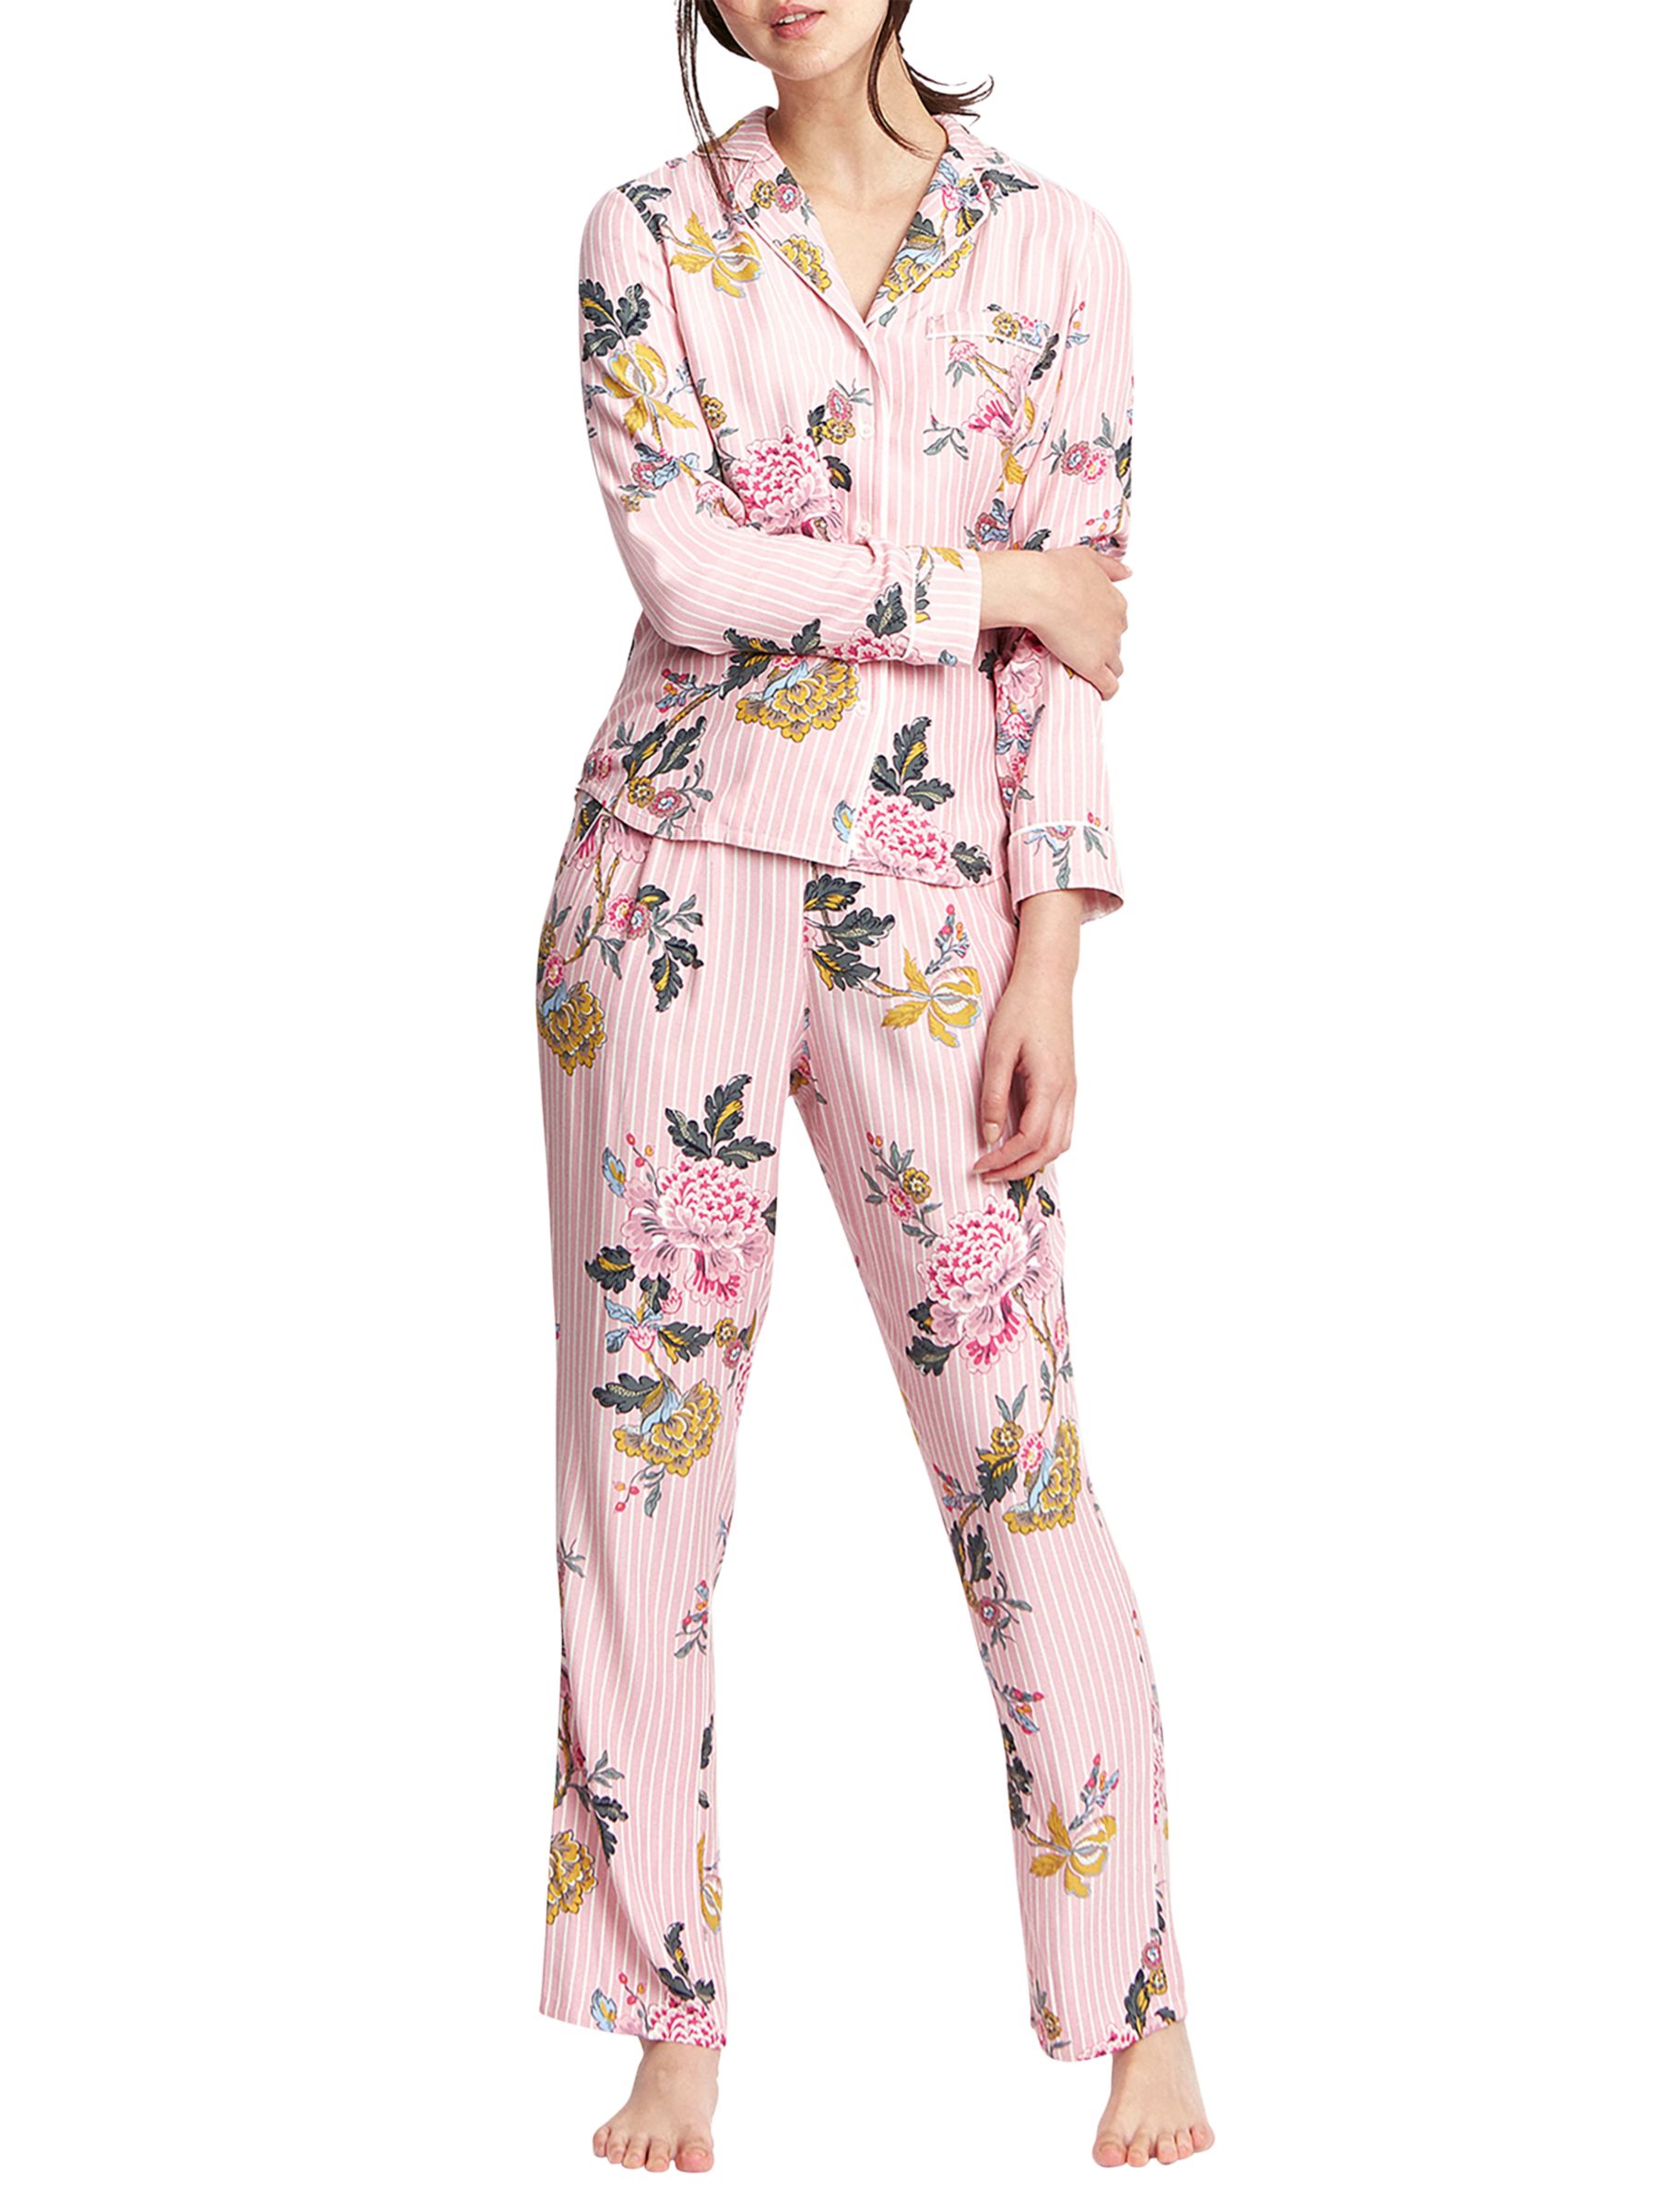 Joules Astrid Floral Stripe Pyjama Set, Pink at John Lewis & Partners